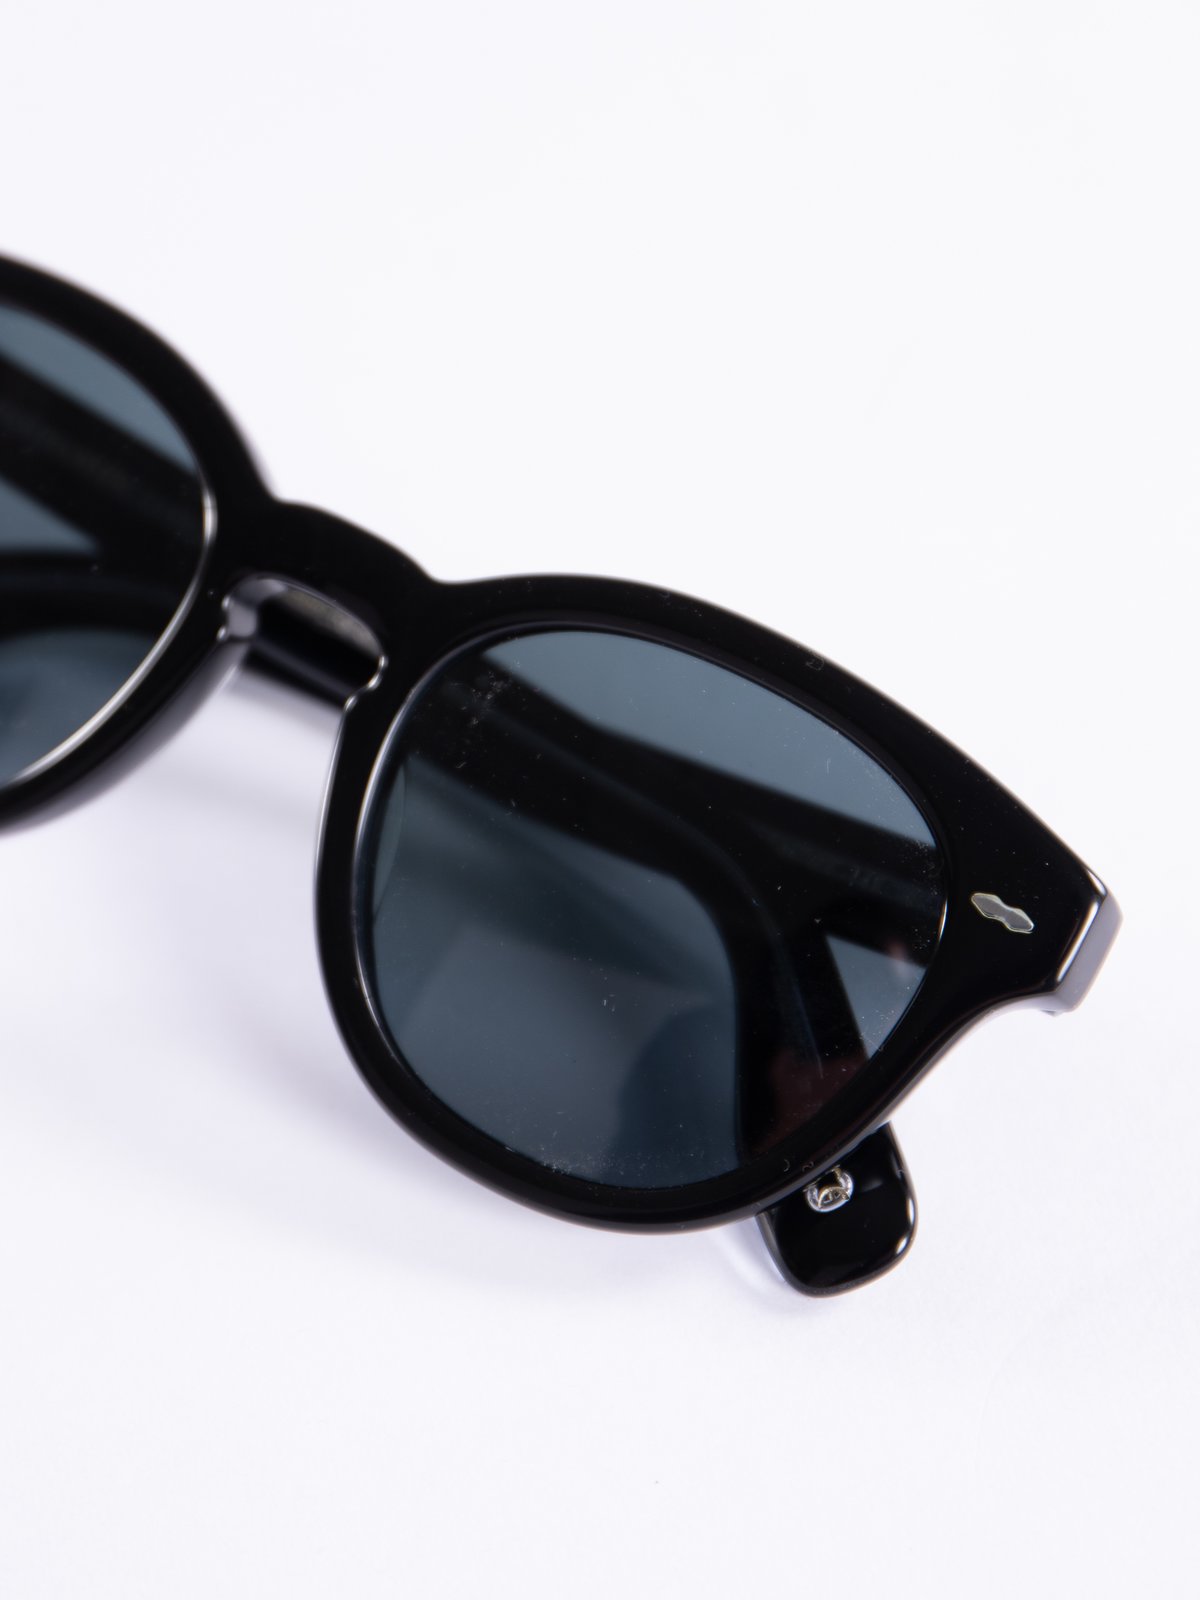 Black/Blue Polar Cary Grant Sunglasses - Image 2